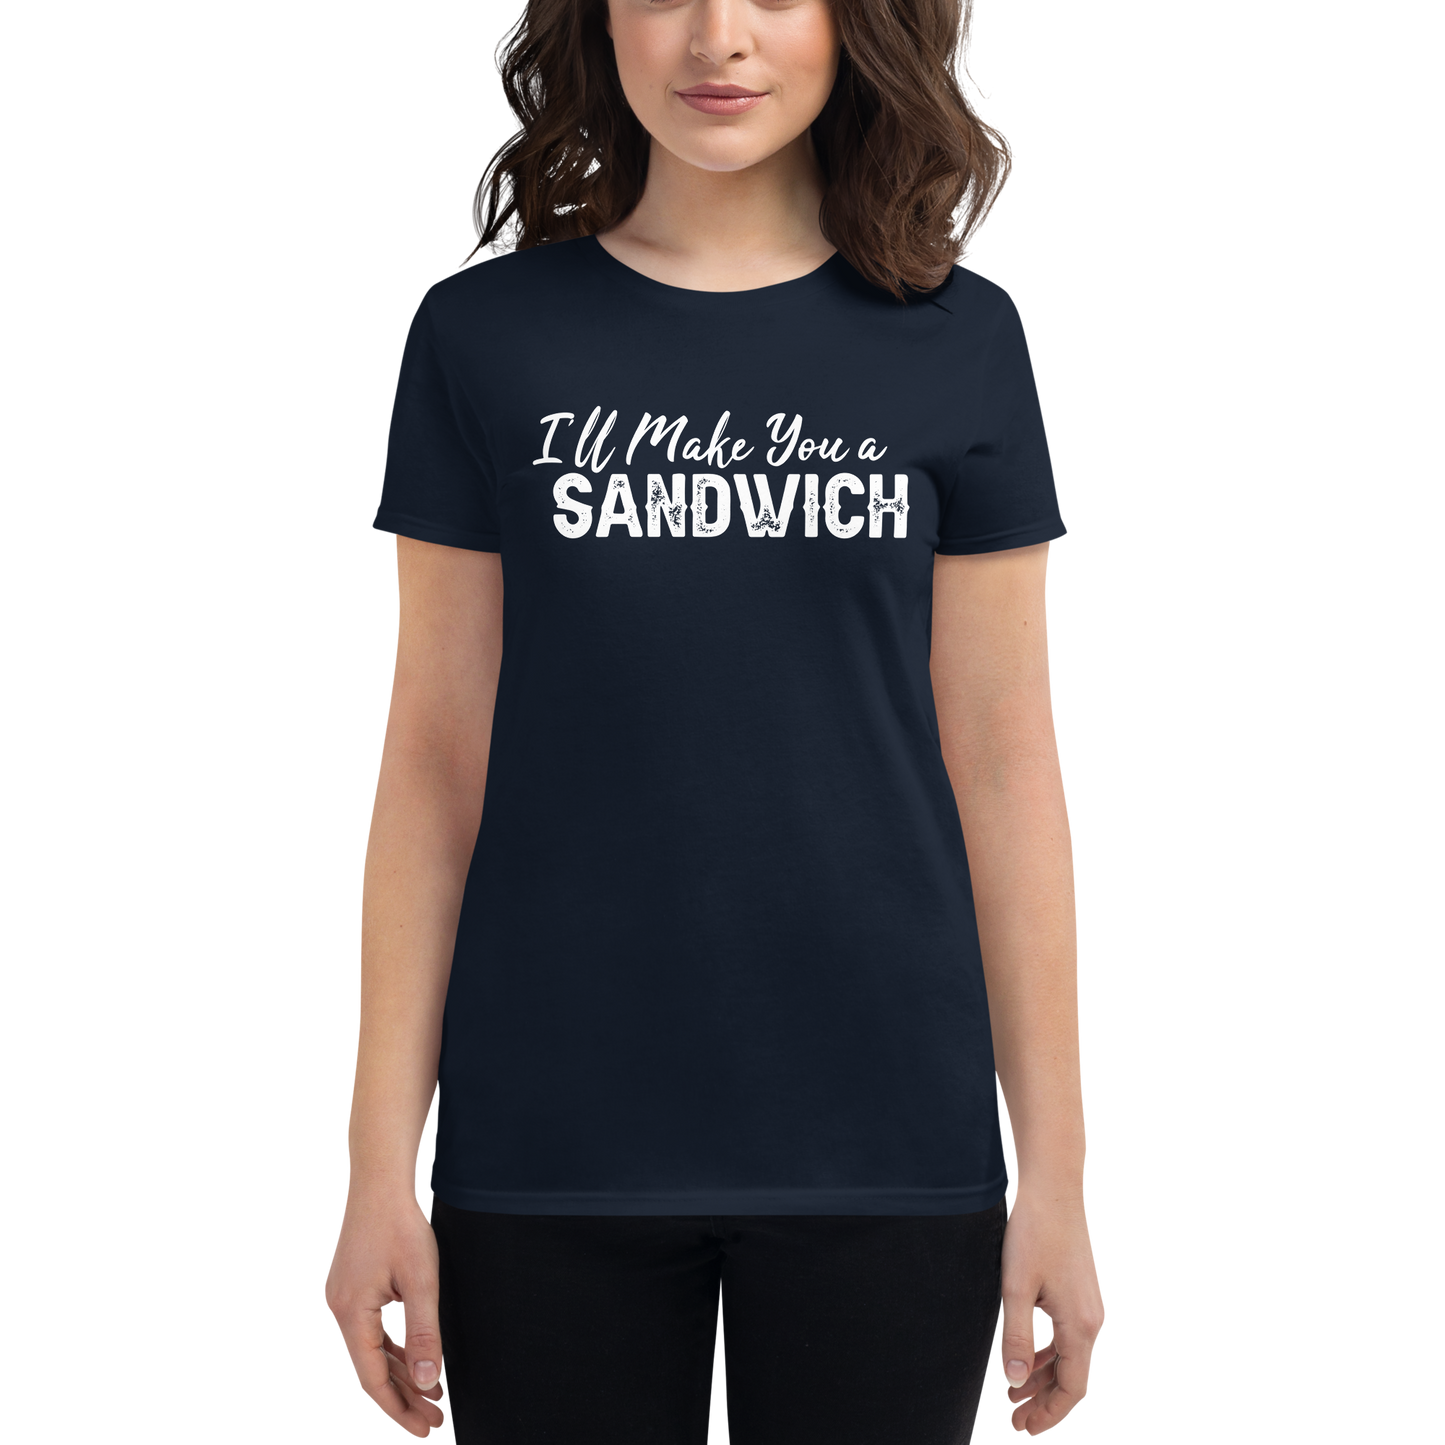 I'LL MAKE YOU A SANDWICH